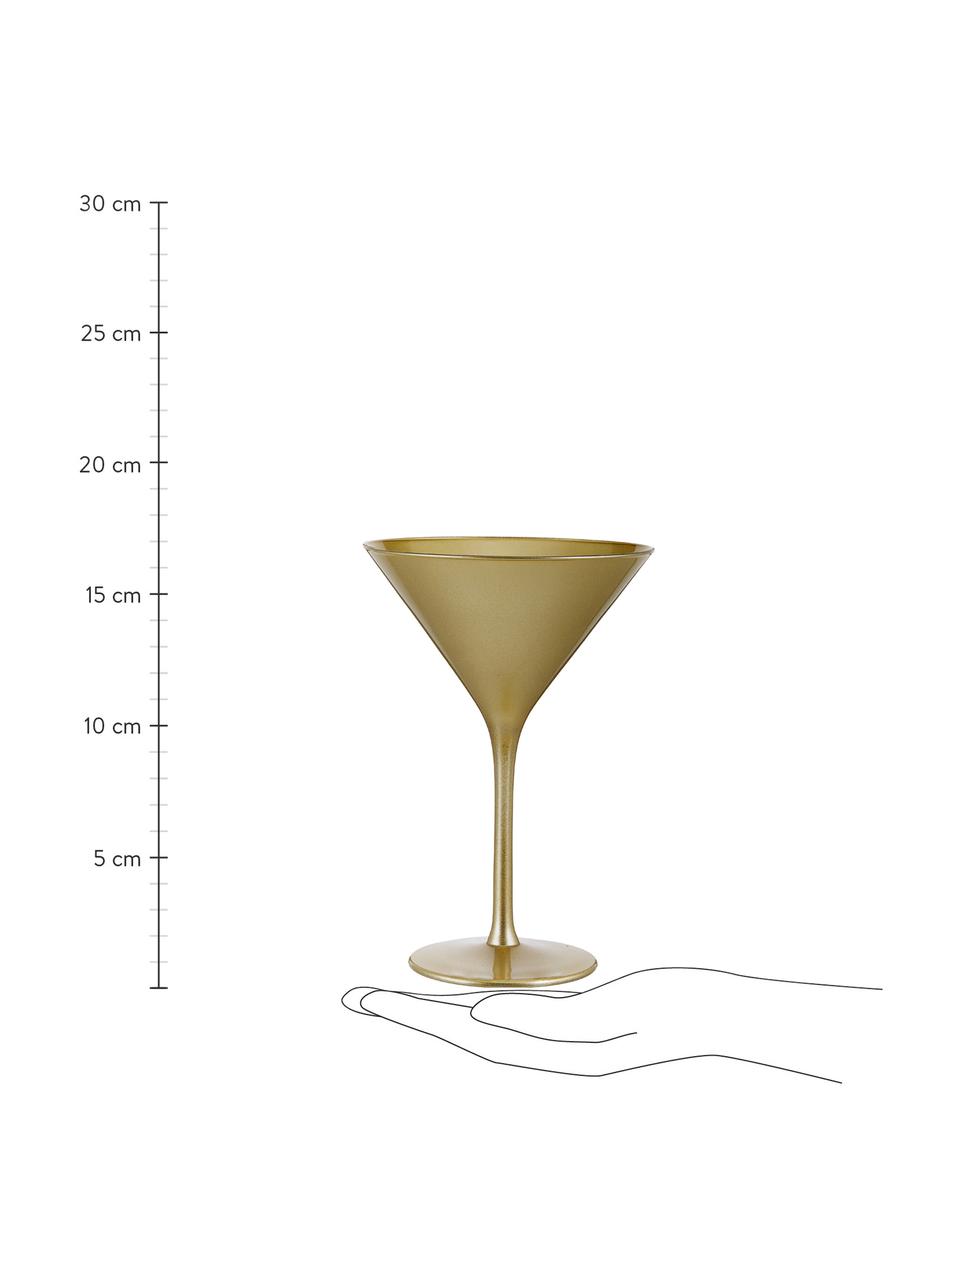 Cocktailglazen Elements, 6 stuks, Gecoat kristalglas, Goudkleurig, Ø 12 x H 17 cm, 240 ml